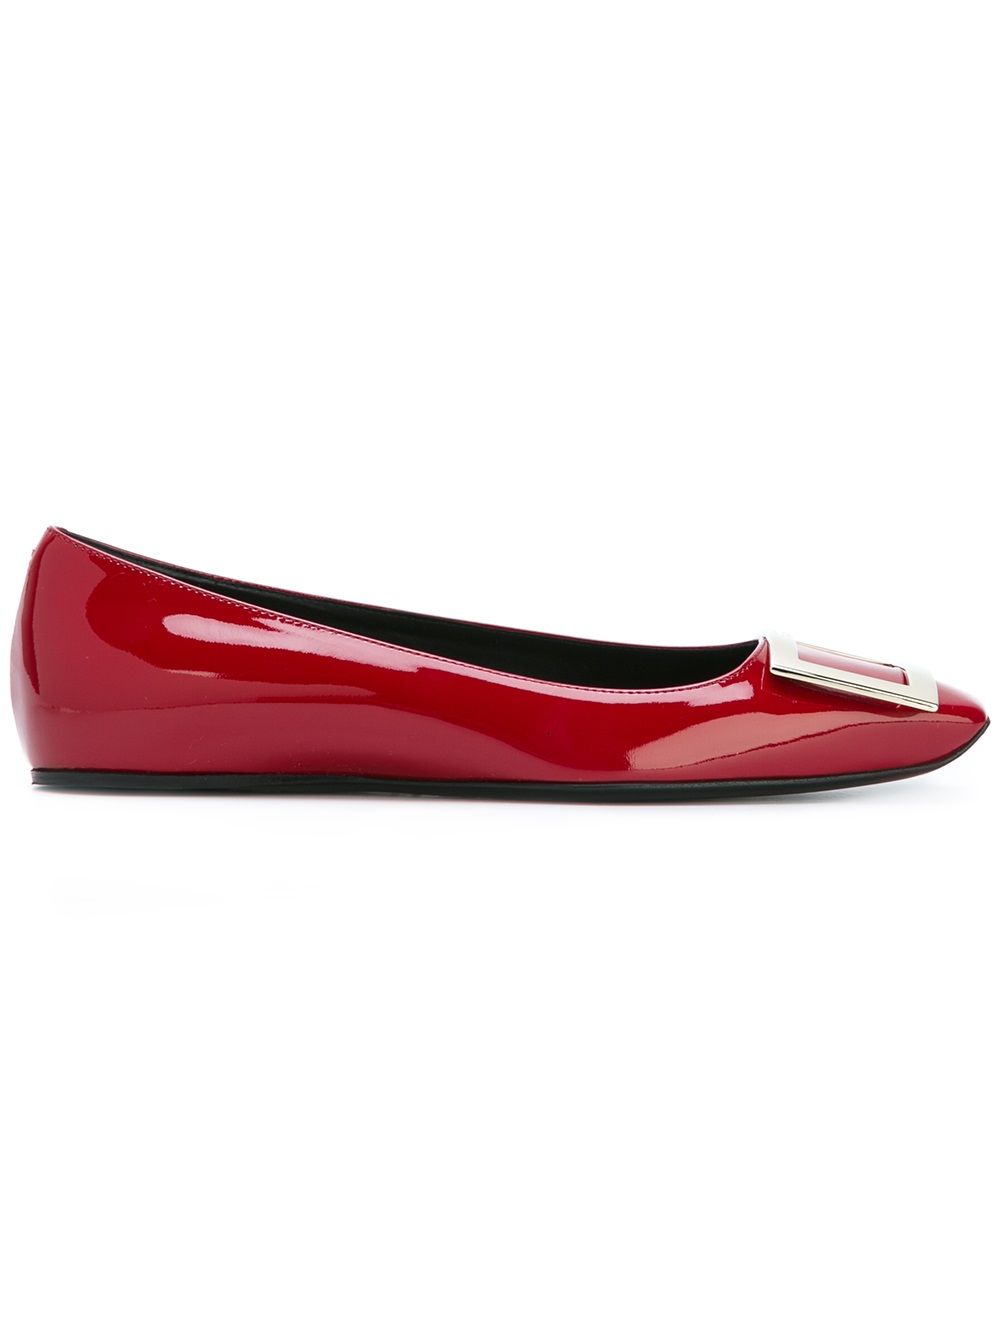 Trompette Patent Leather Ballet Flats дамски обувки Roger Vivier 843789945_35